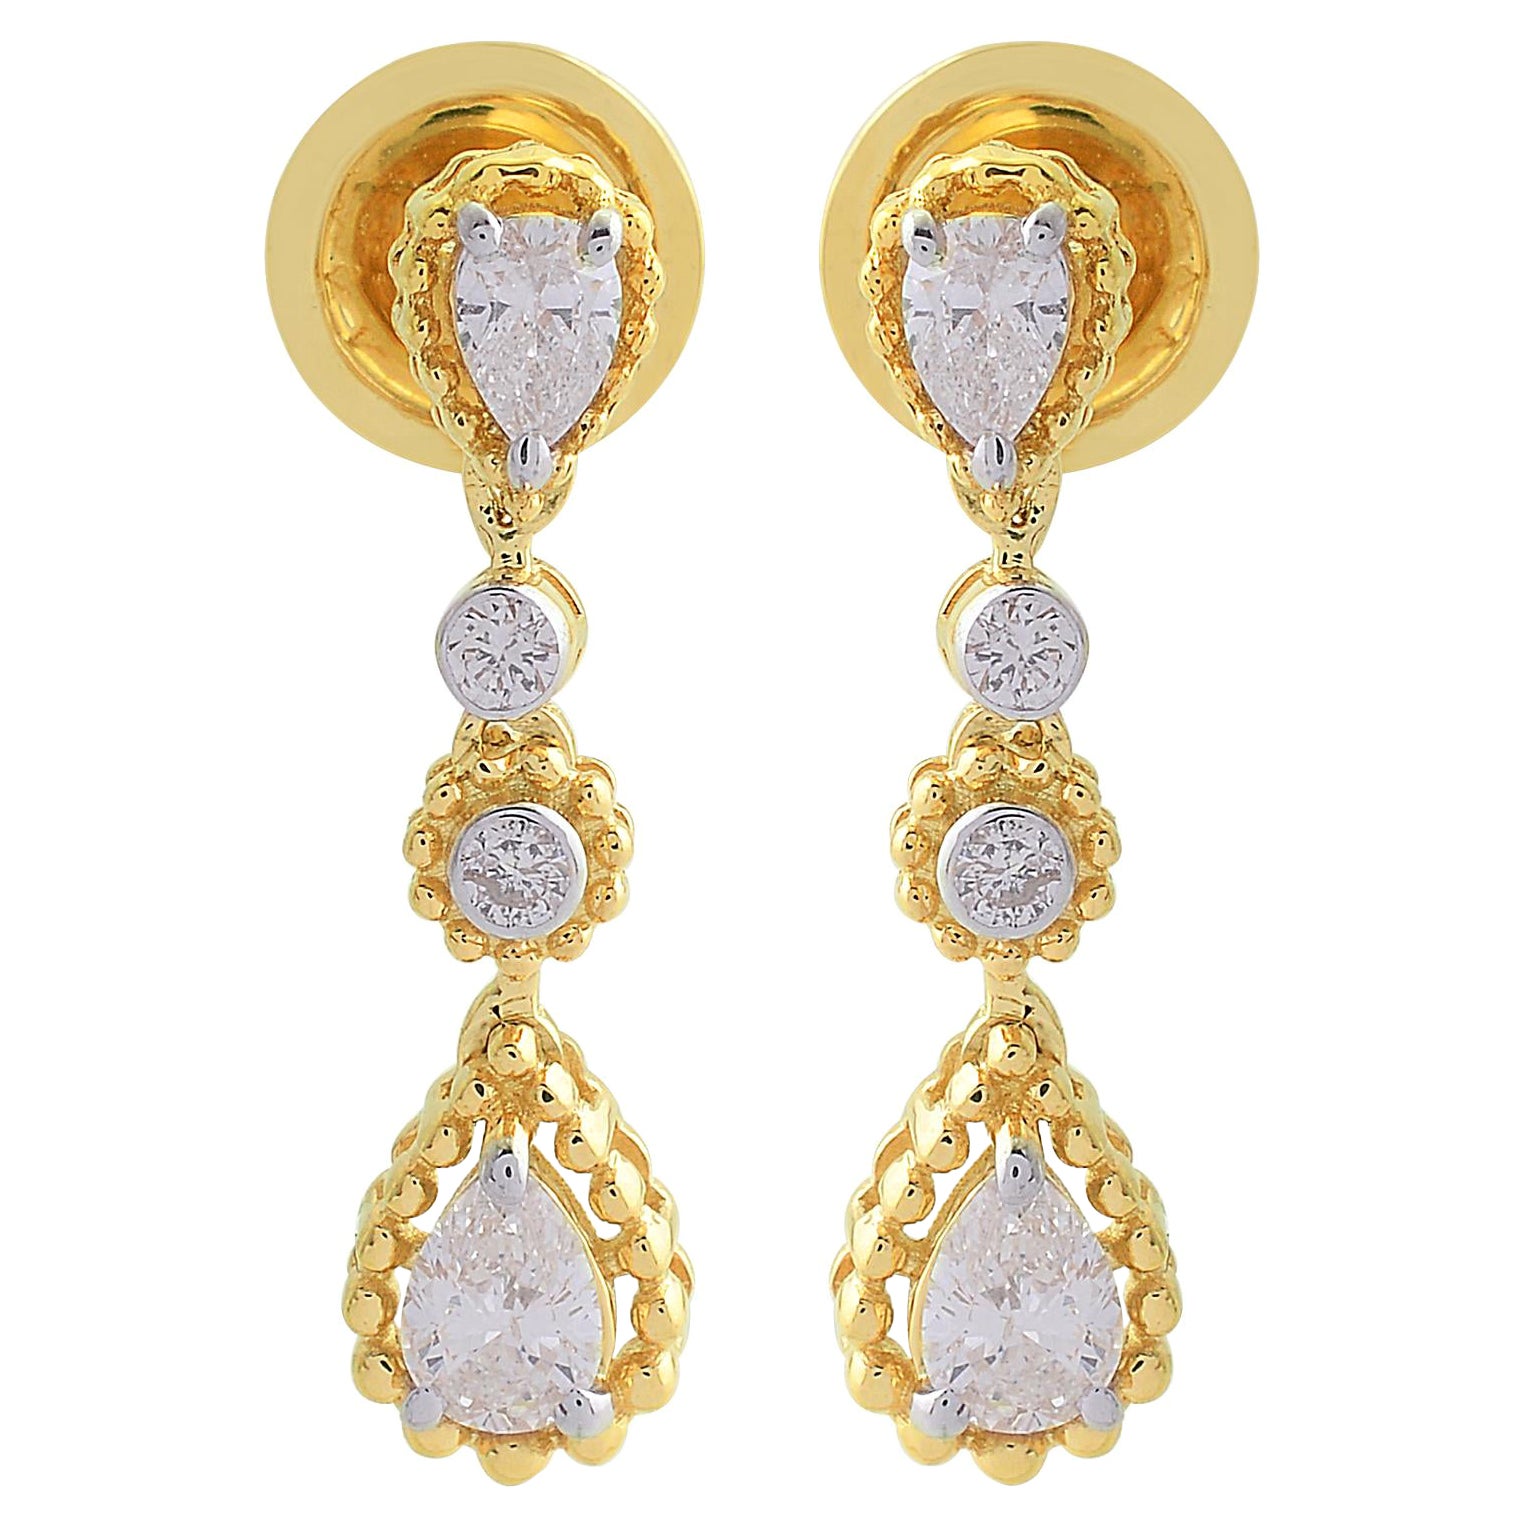 SI Clarity HI Color Pear & Round Diamond Dangle Earrings 18k Yellow Gold Jewelry